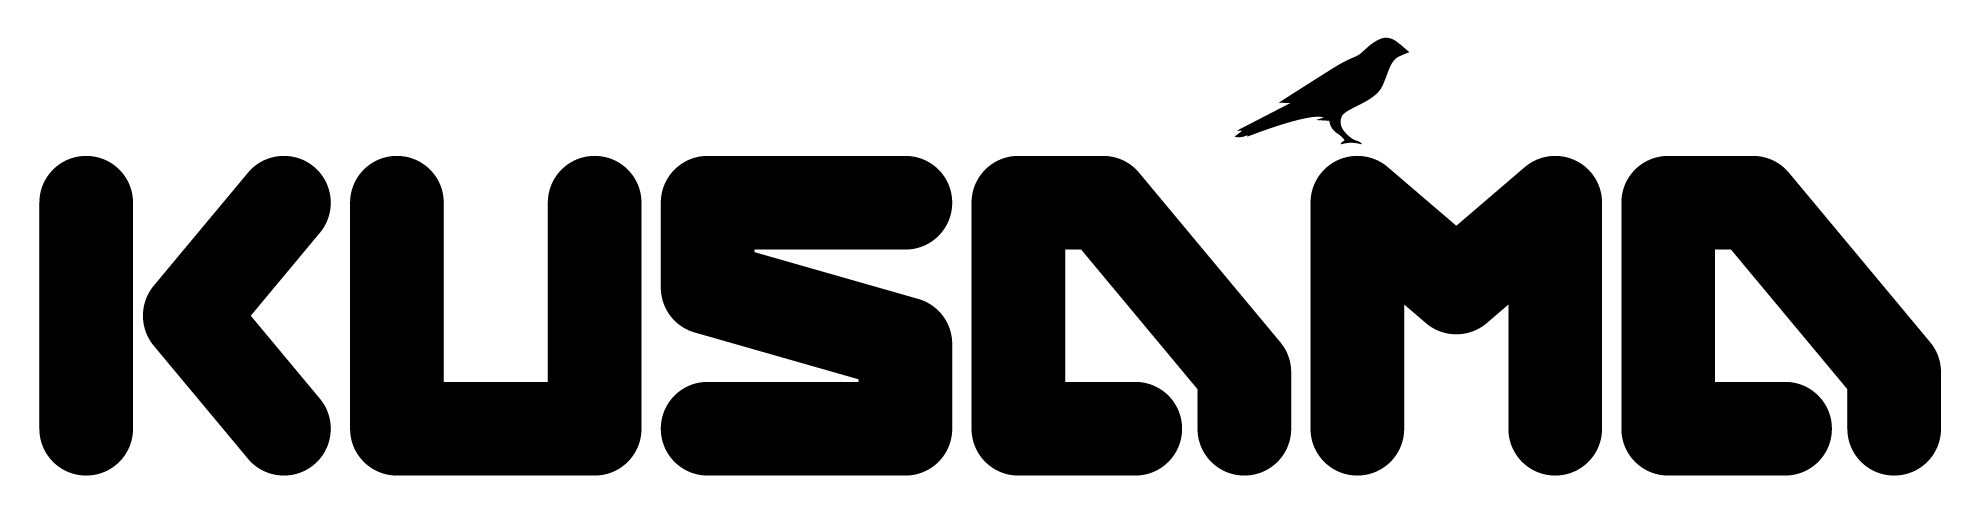 Kusama logo